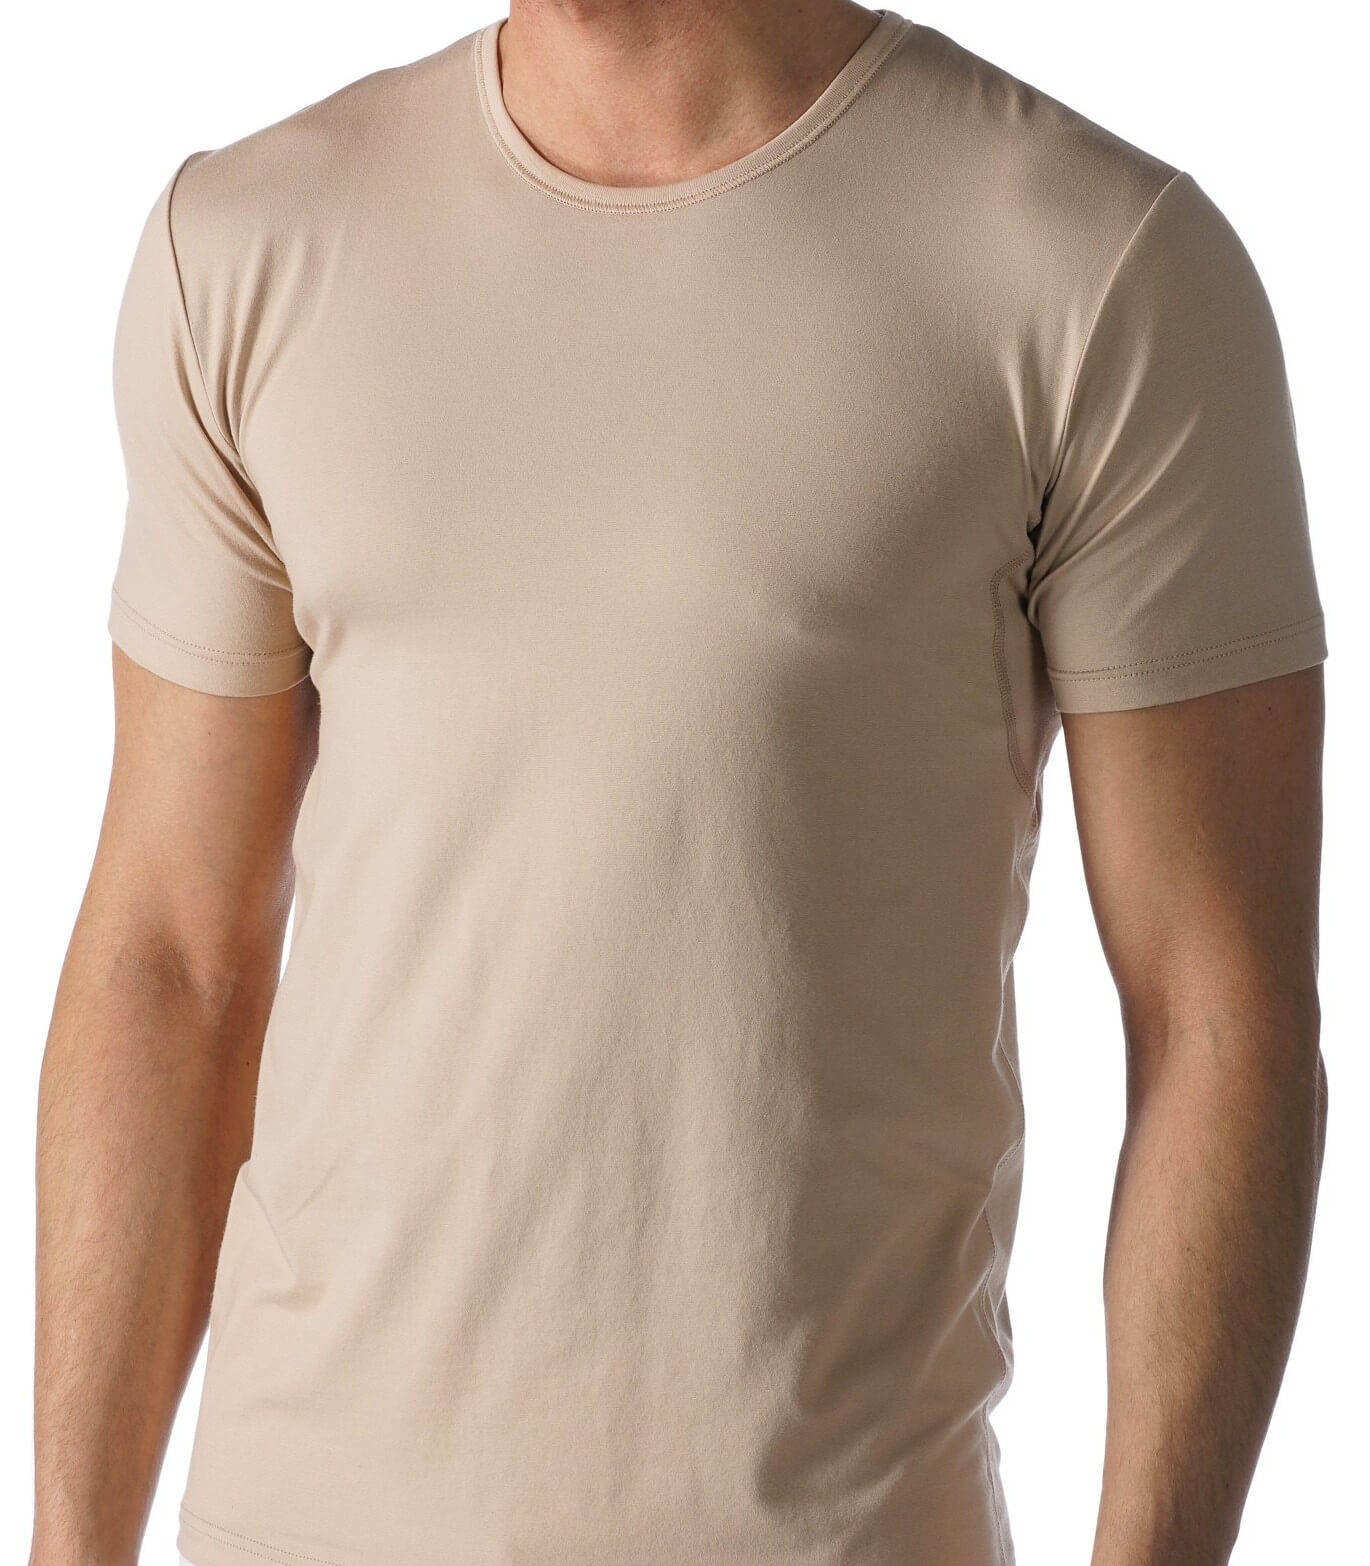 Mey Serie Dry Cotton Functional Herren Crew-Neck Shirt